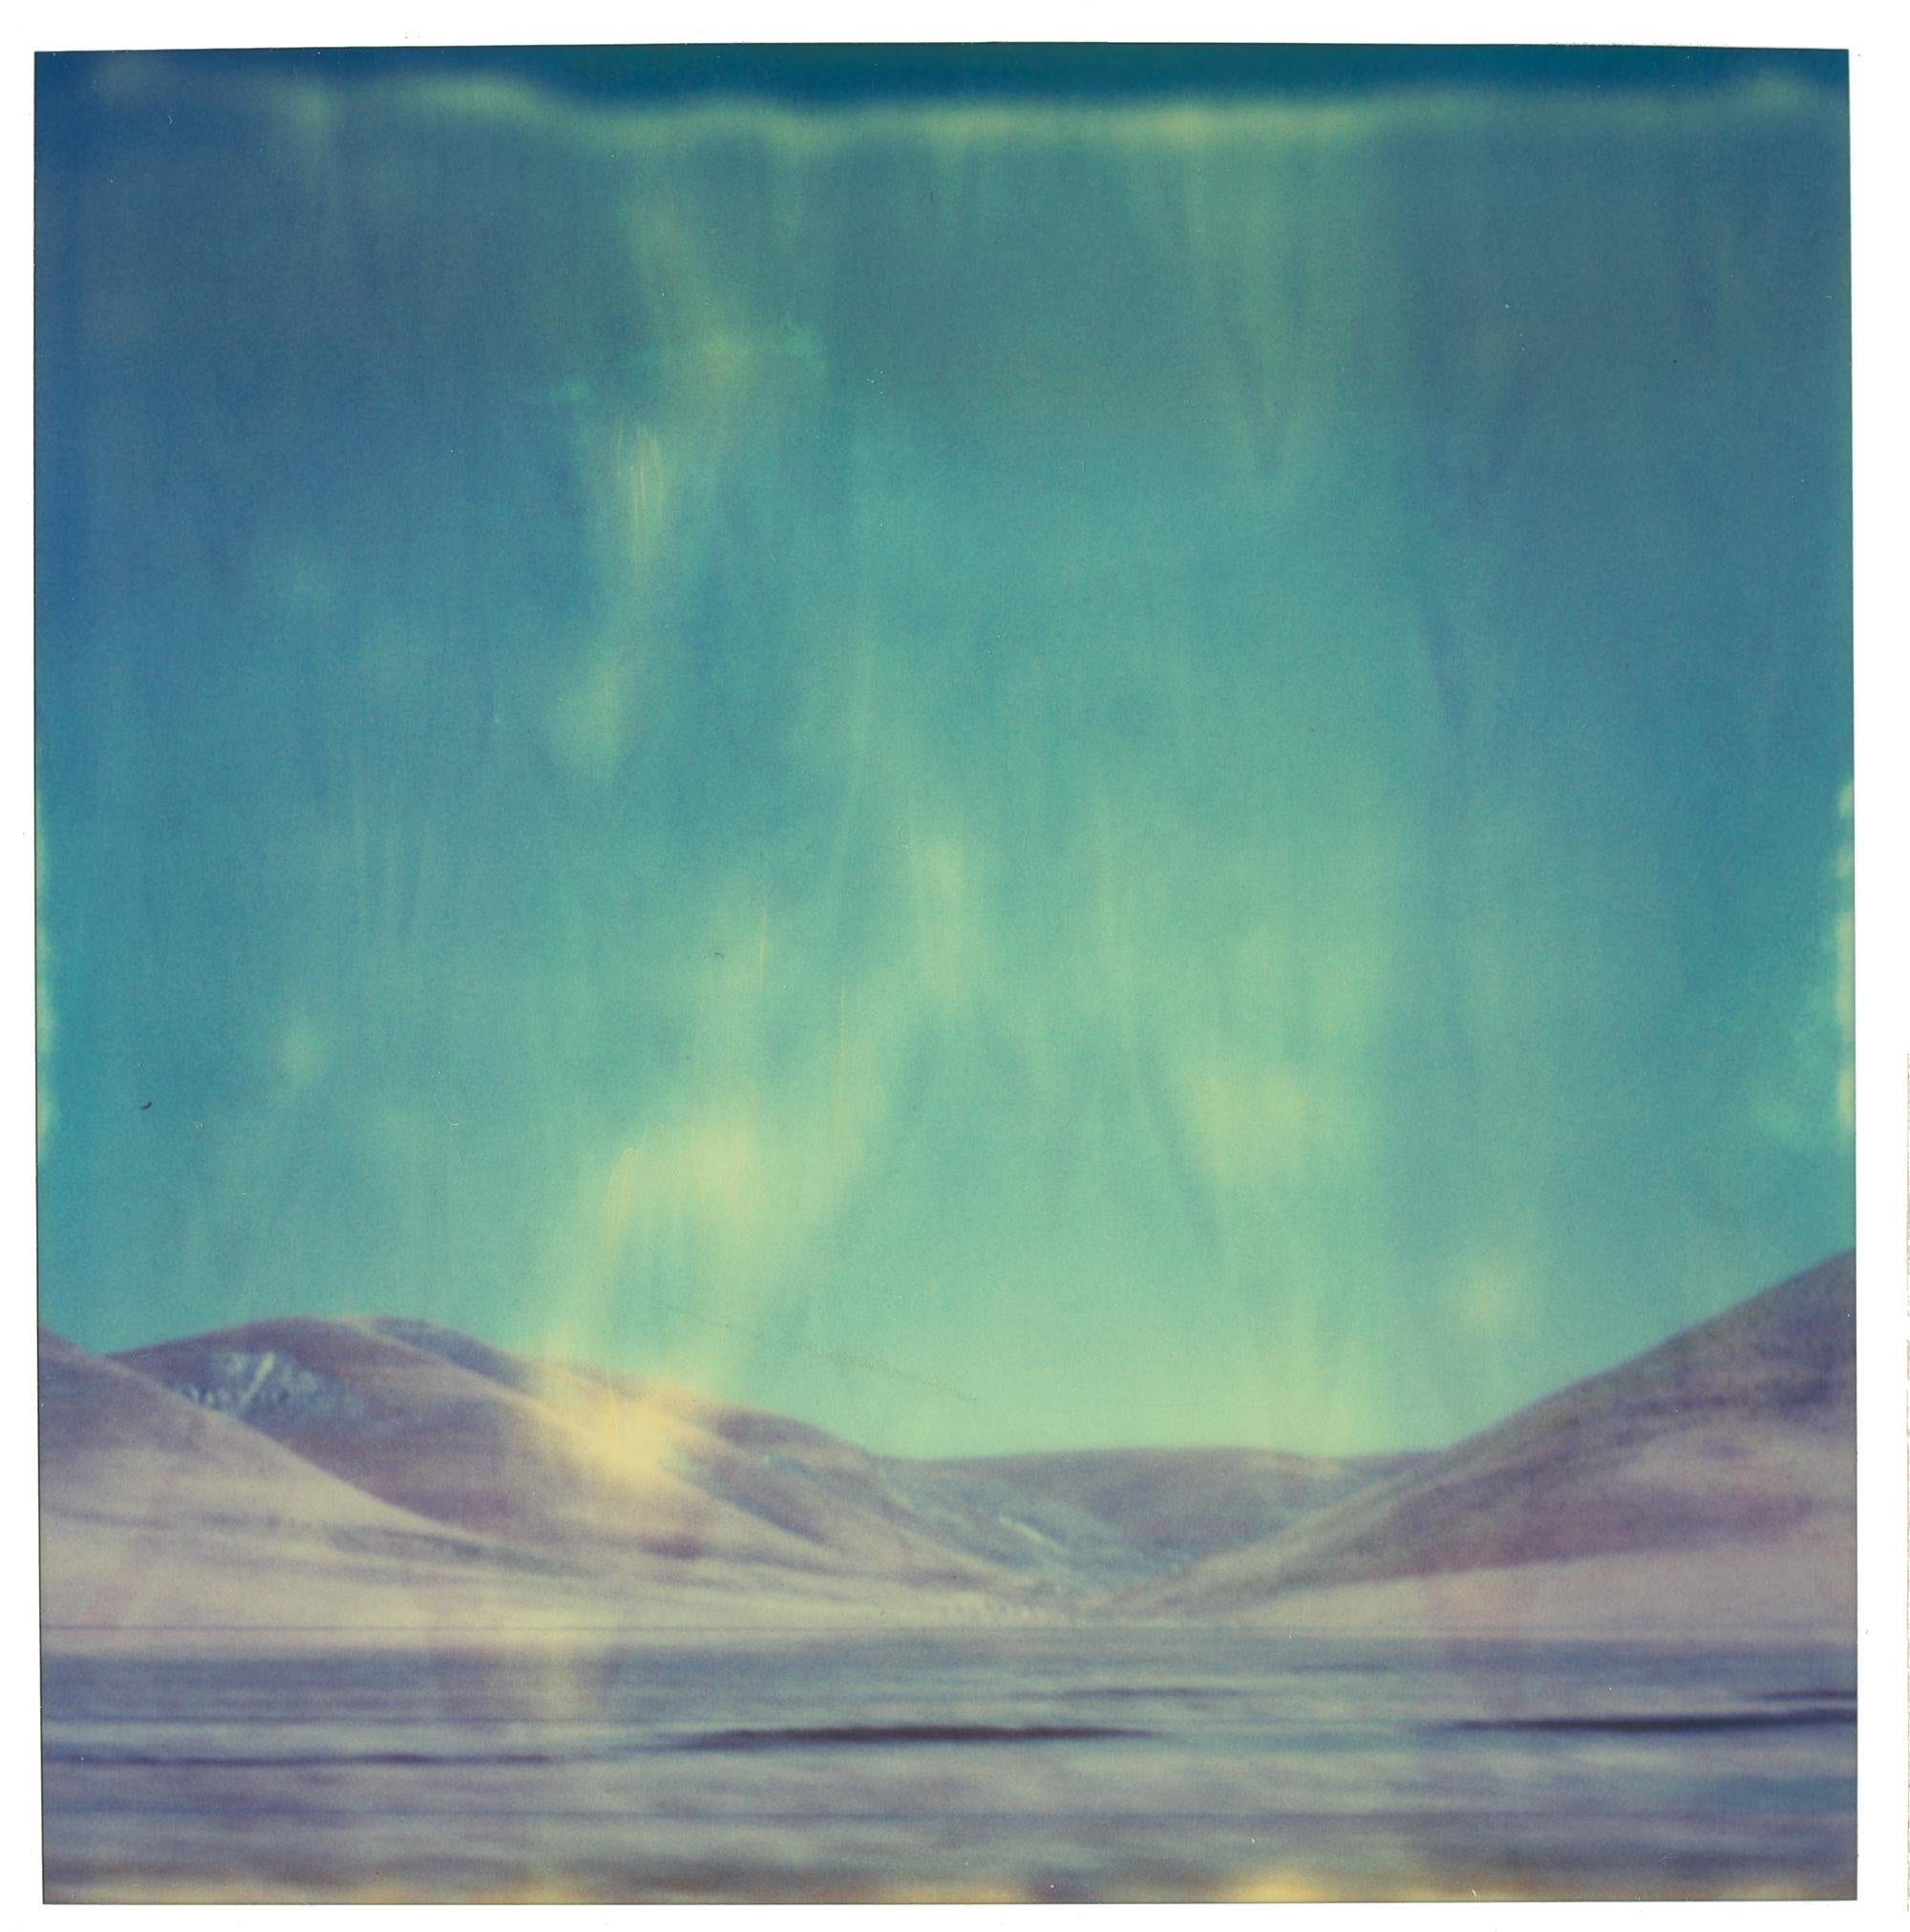 Stefanie Schneider Landscape Photograph - Blue Mountains (analog) 58x56cm hand printed instant photography